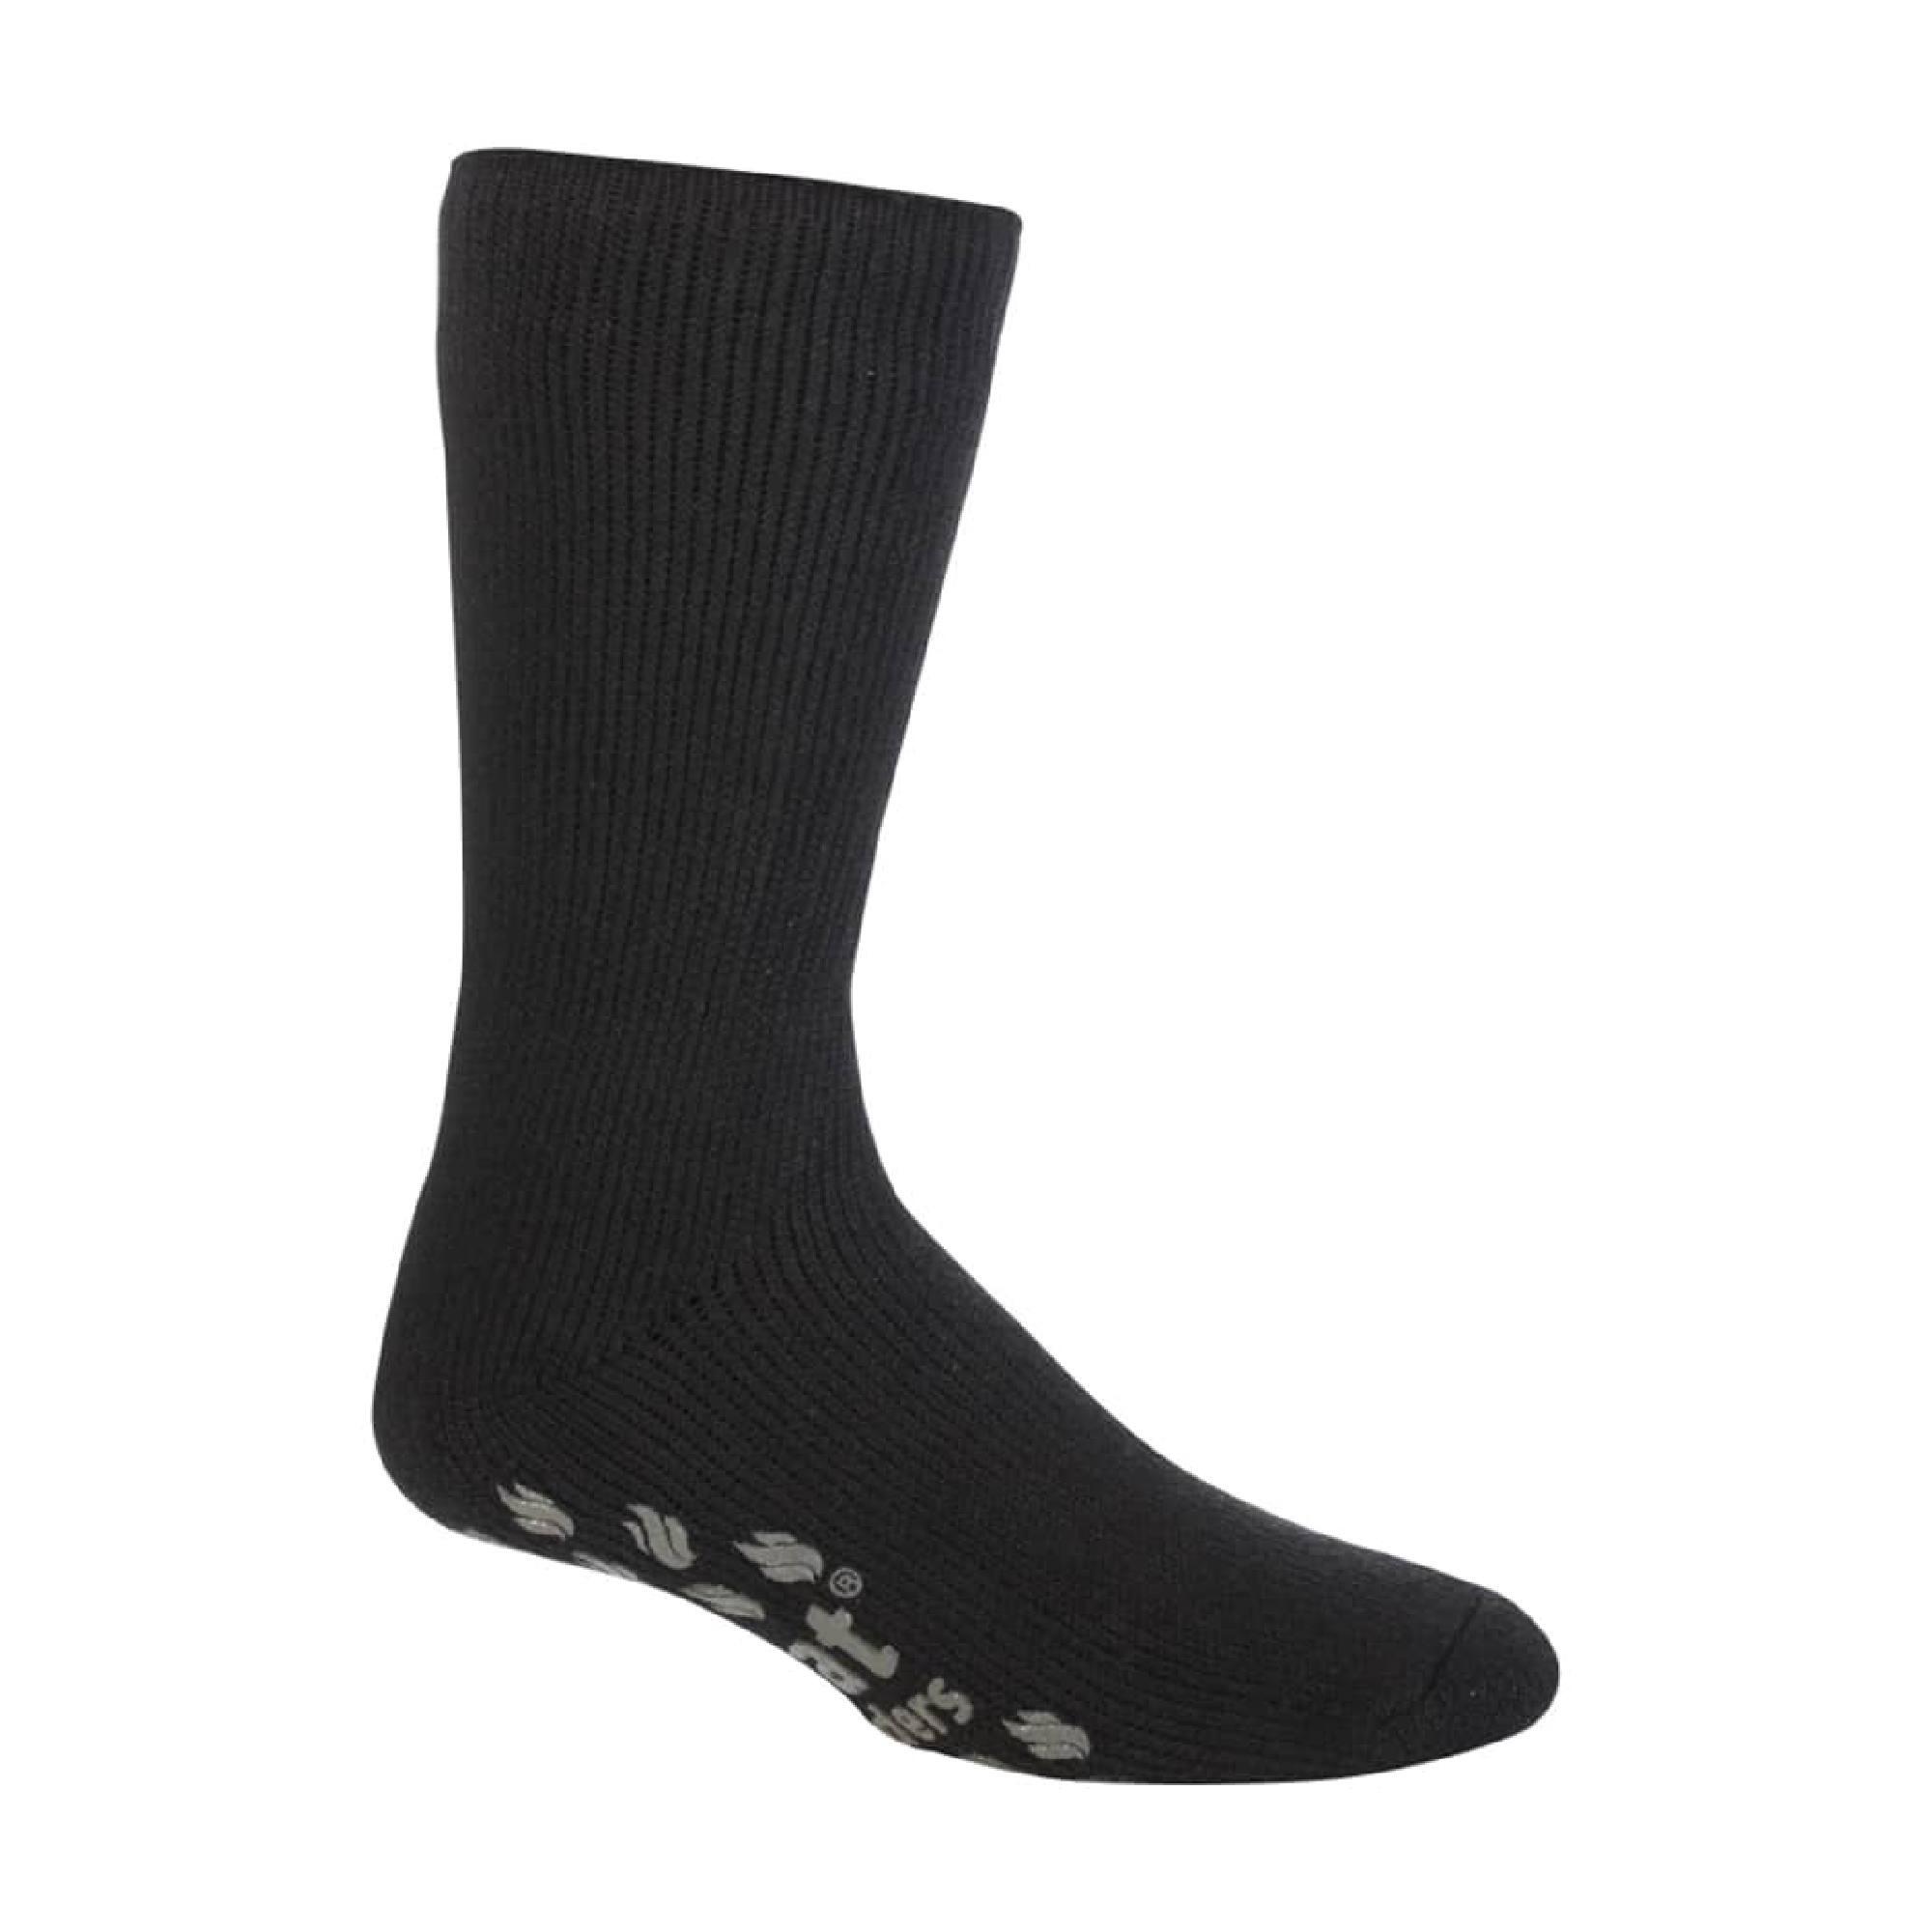 Mens Winter Non Slip Warm Thermal Slipper Socks with Grips